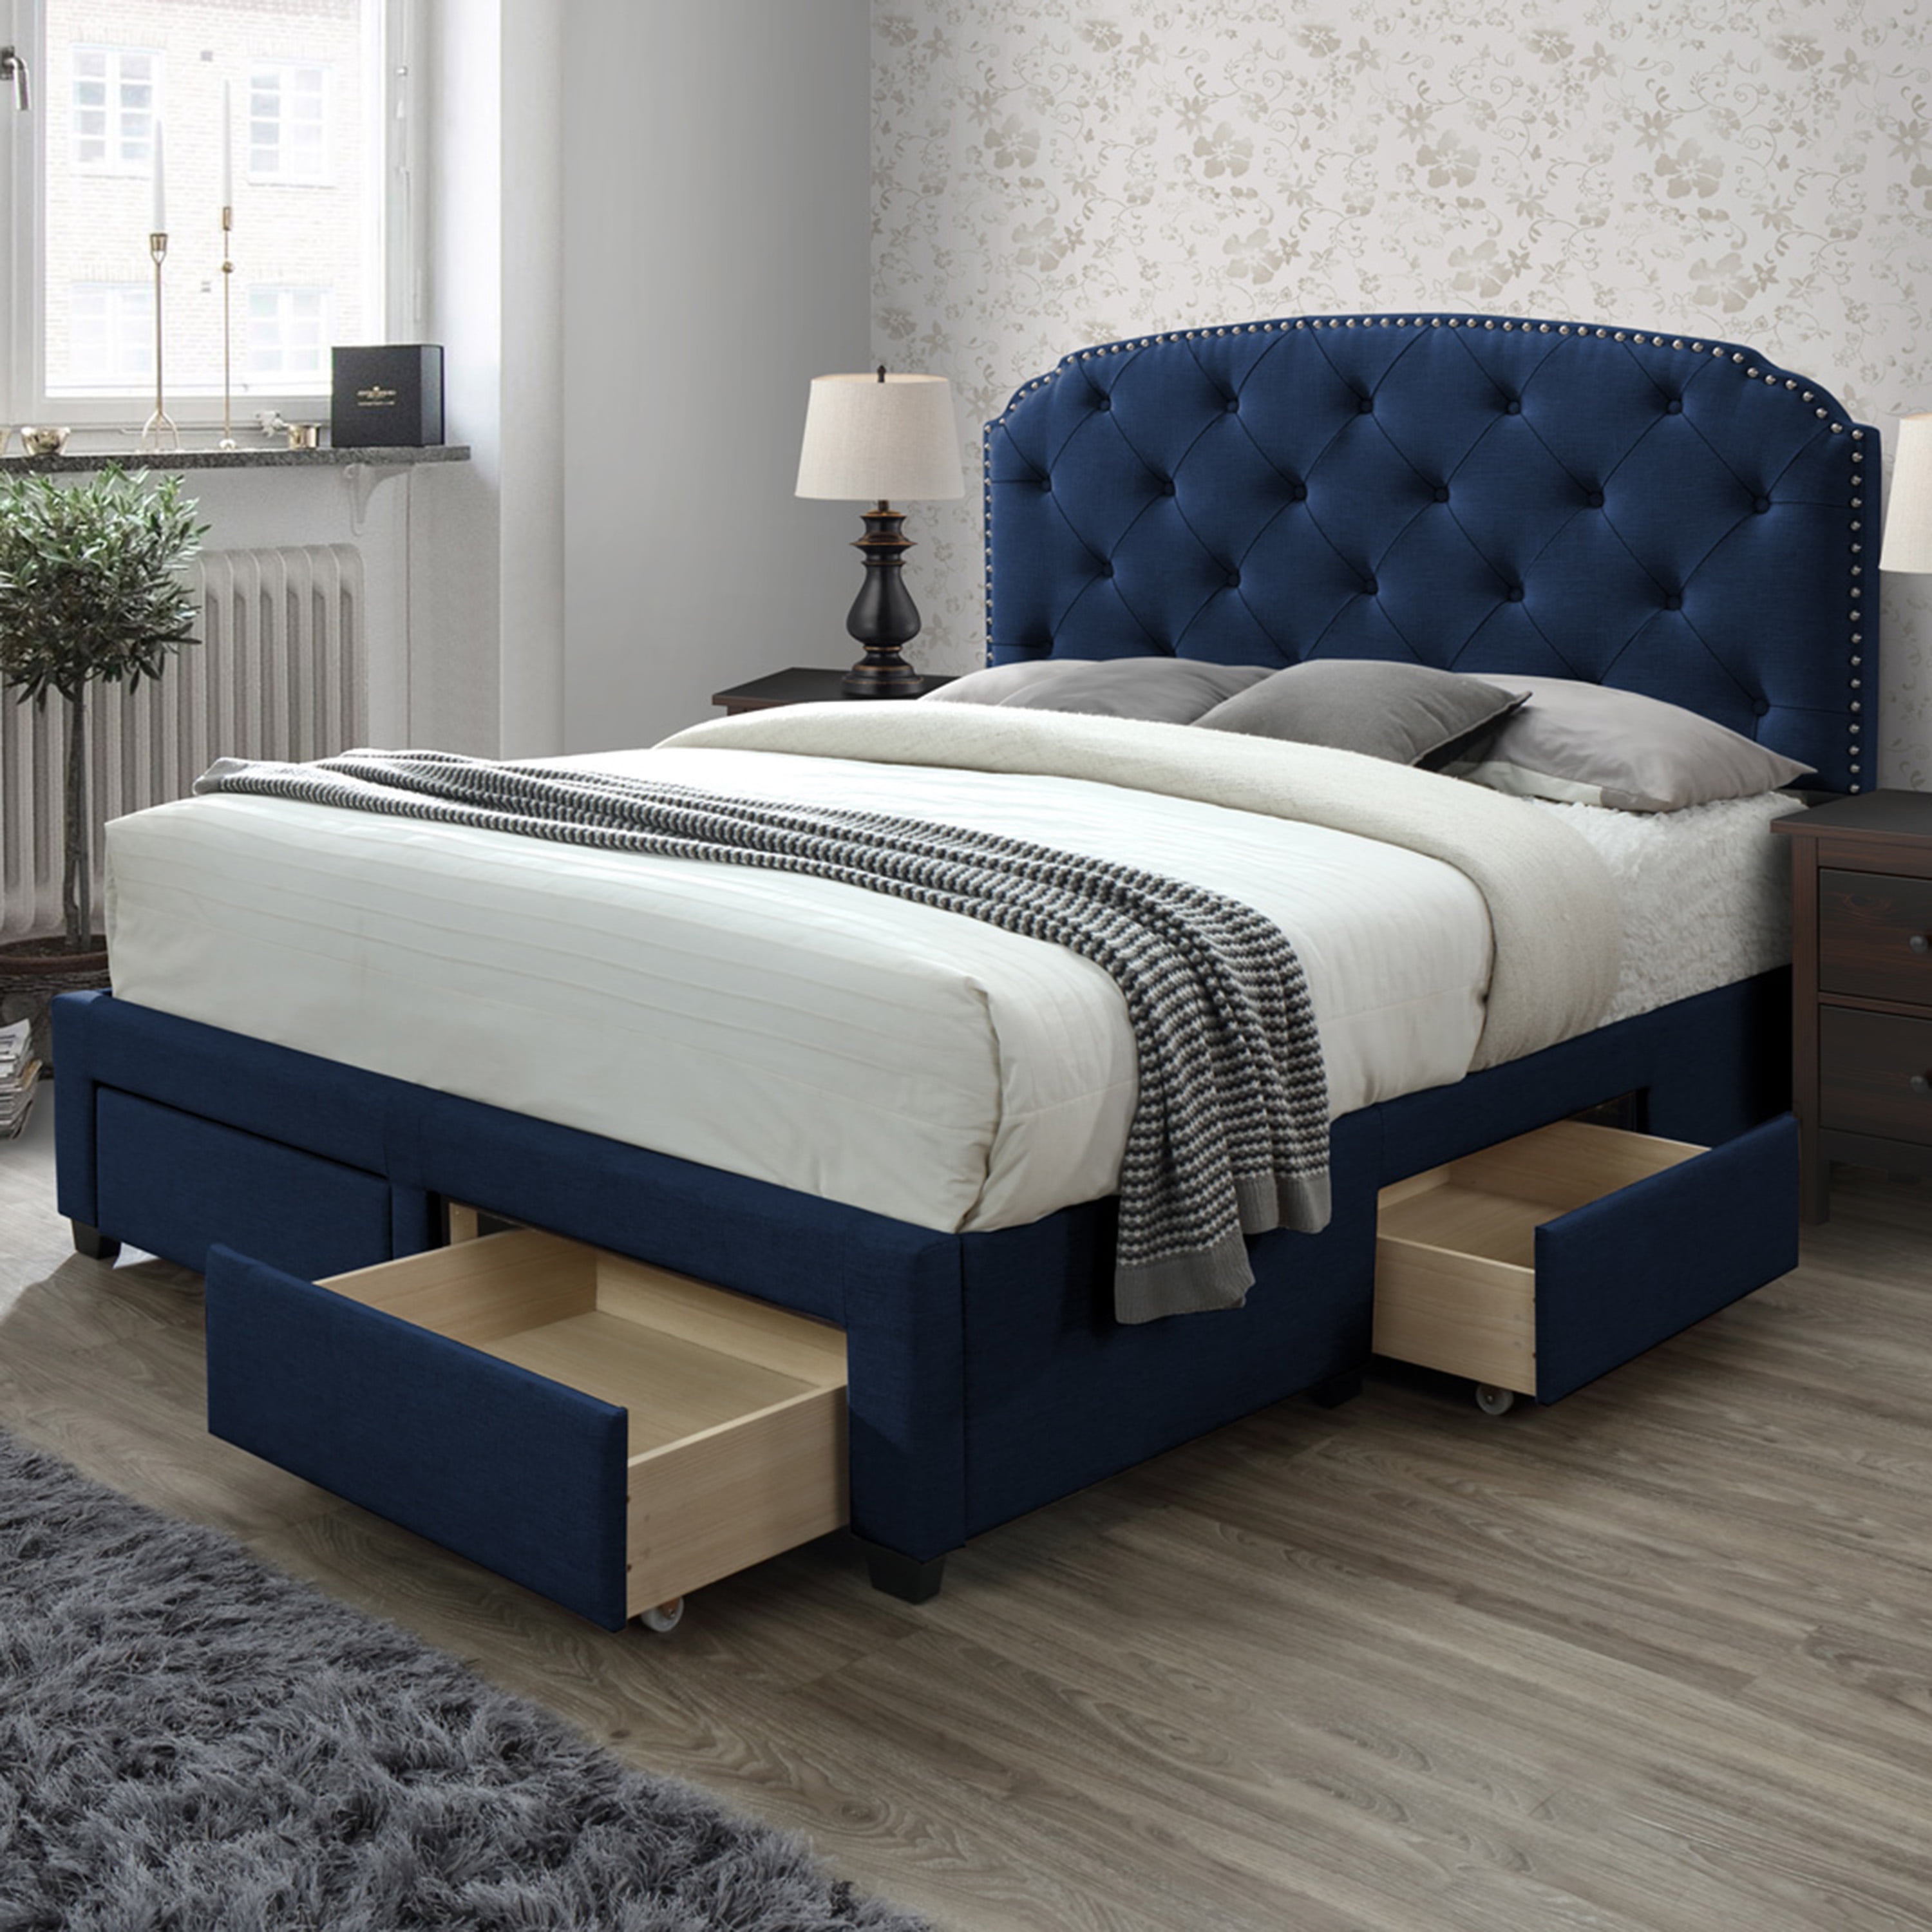 Dg Casa Argo Tufted Upholstered Panel, Blue Bed Frame King